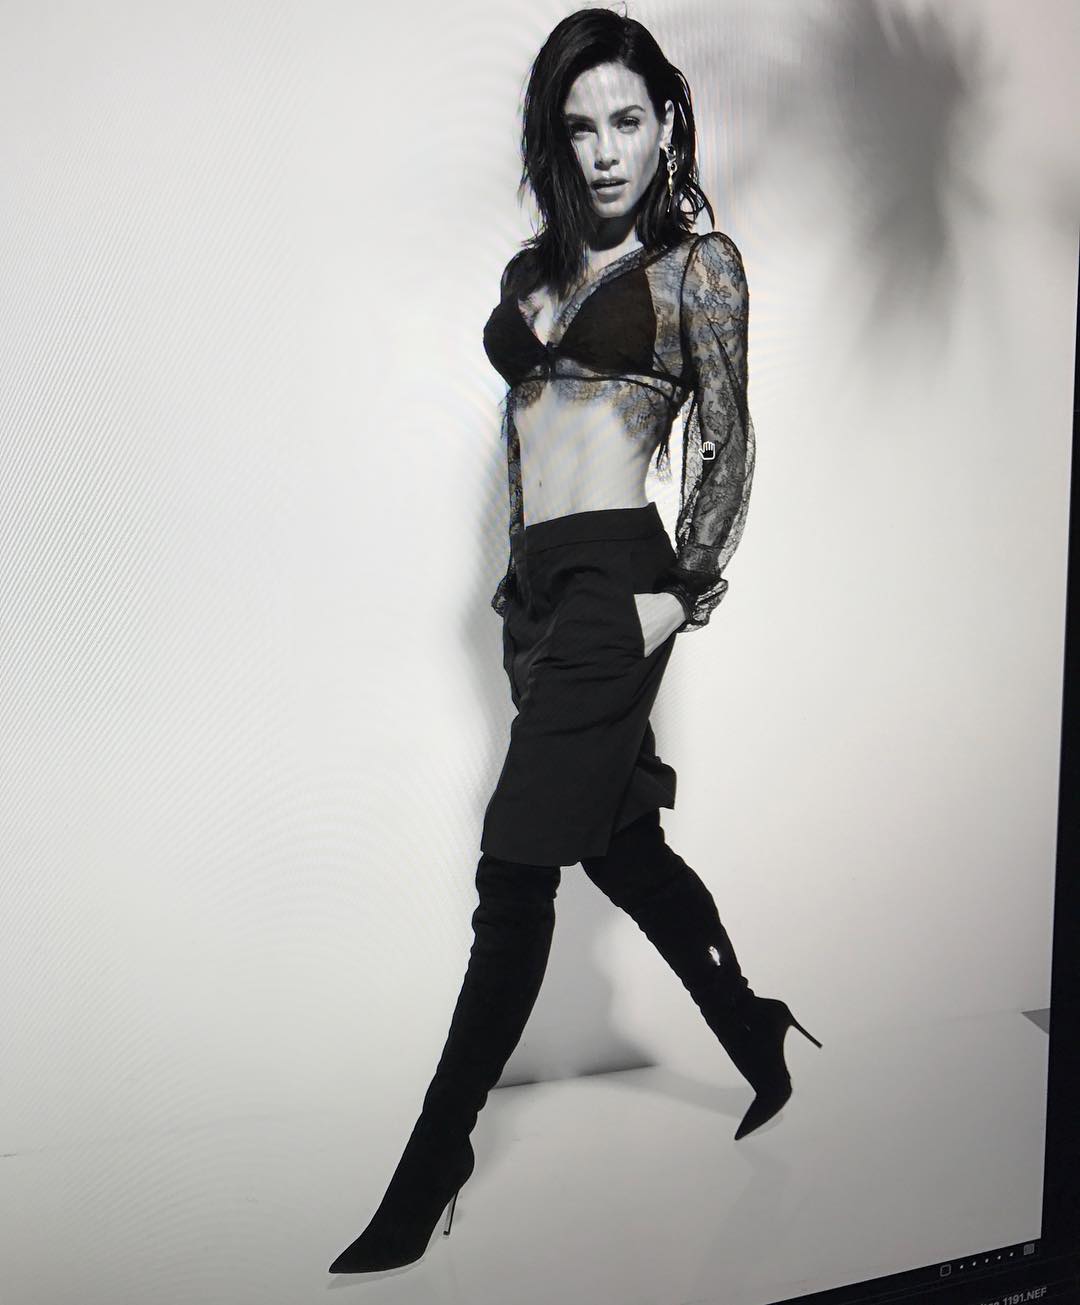 Jenna Dewan -- MOSN 081017 To 260818 033.jpg